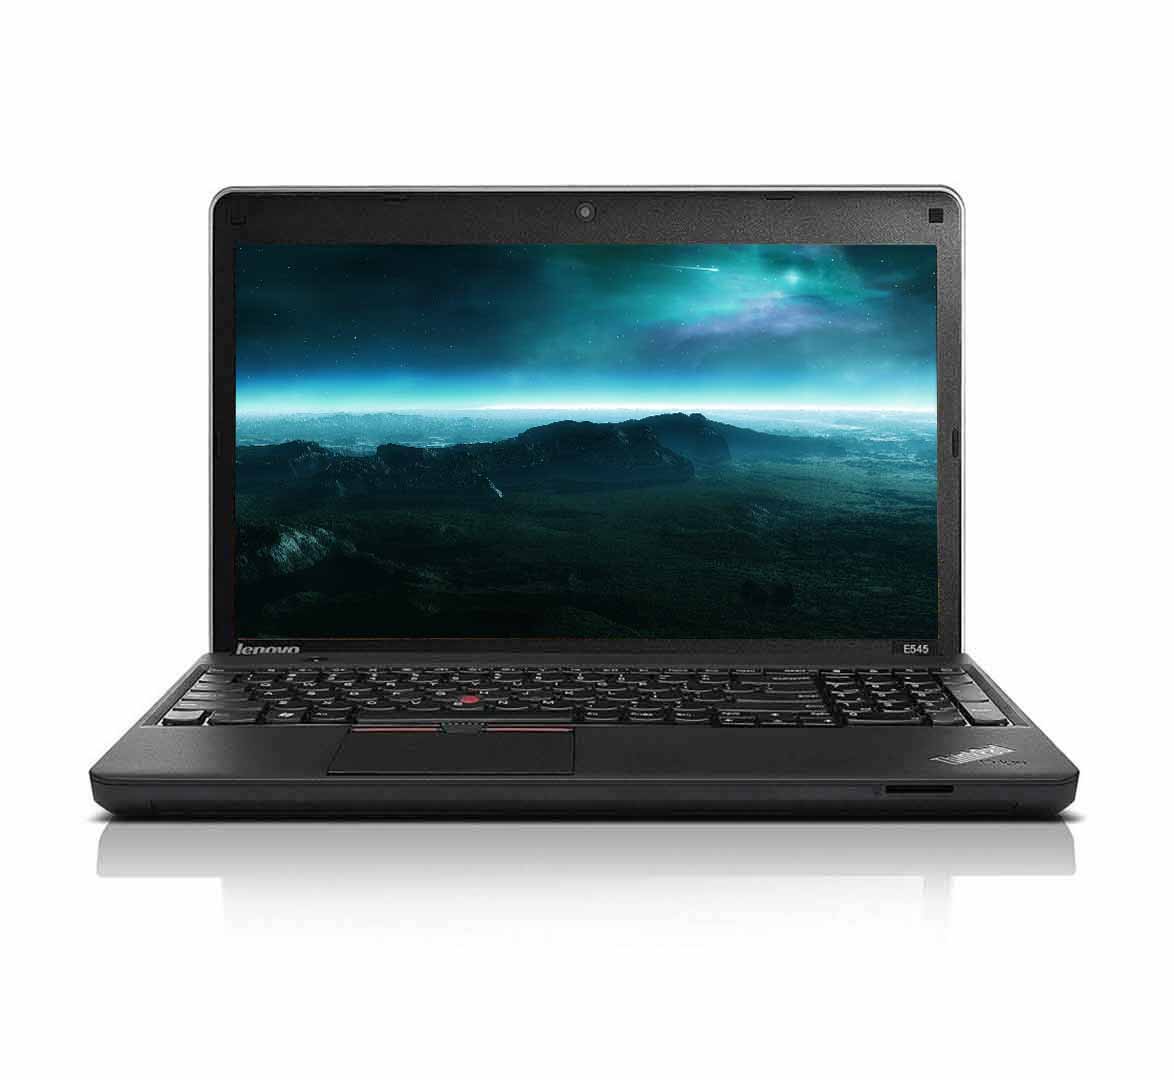 Lenovo ThinkPad Edge E545 Laptop, AMD A6 Series CPU, 4GB RAM, 320GB HDD, AMD Radeon HD, 15 inch Display, Windows 10 Pro